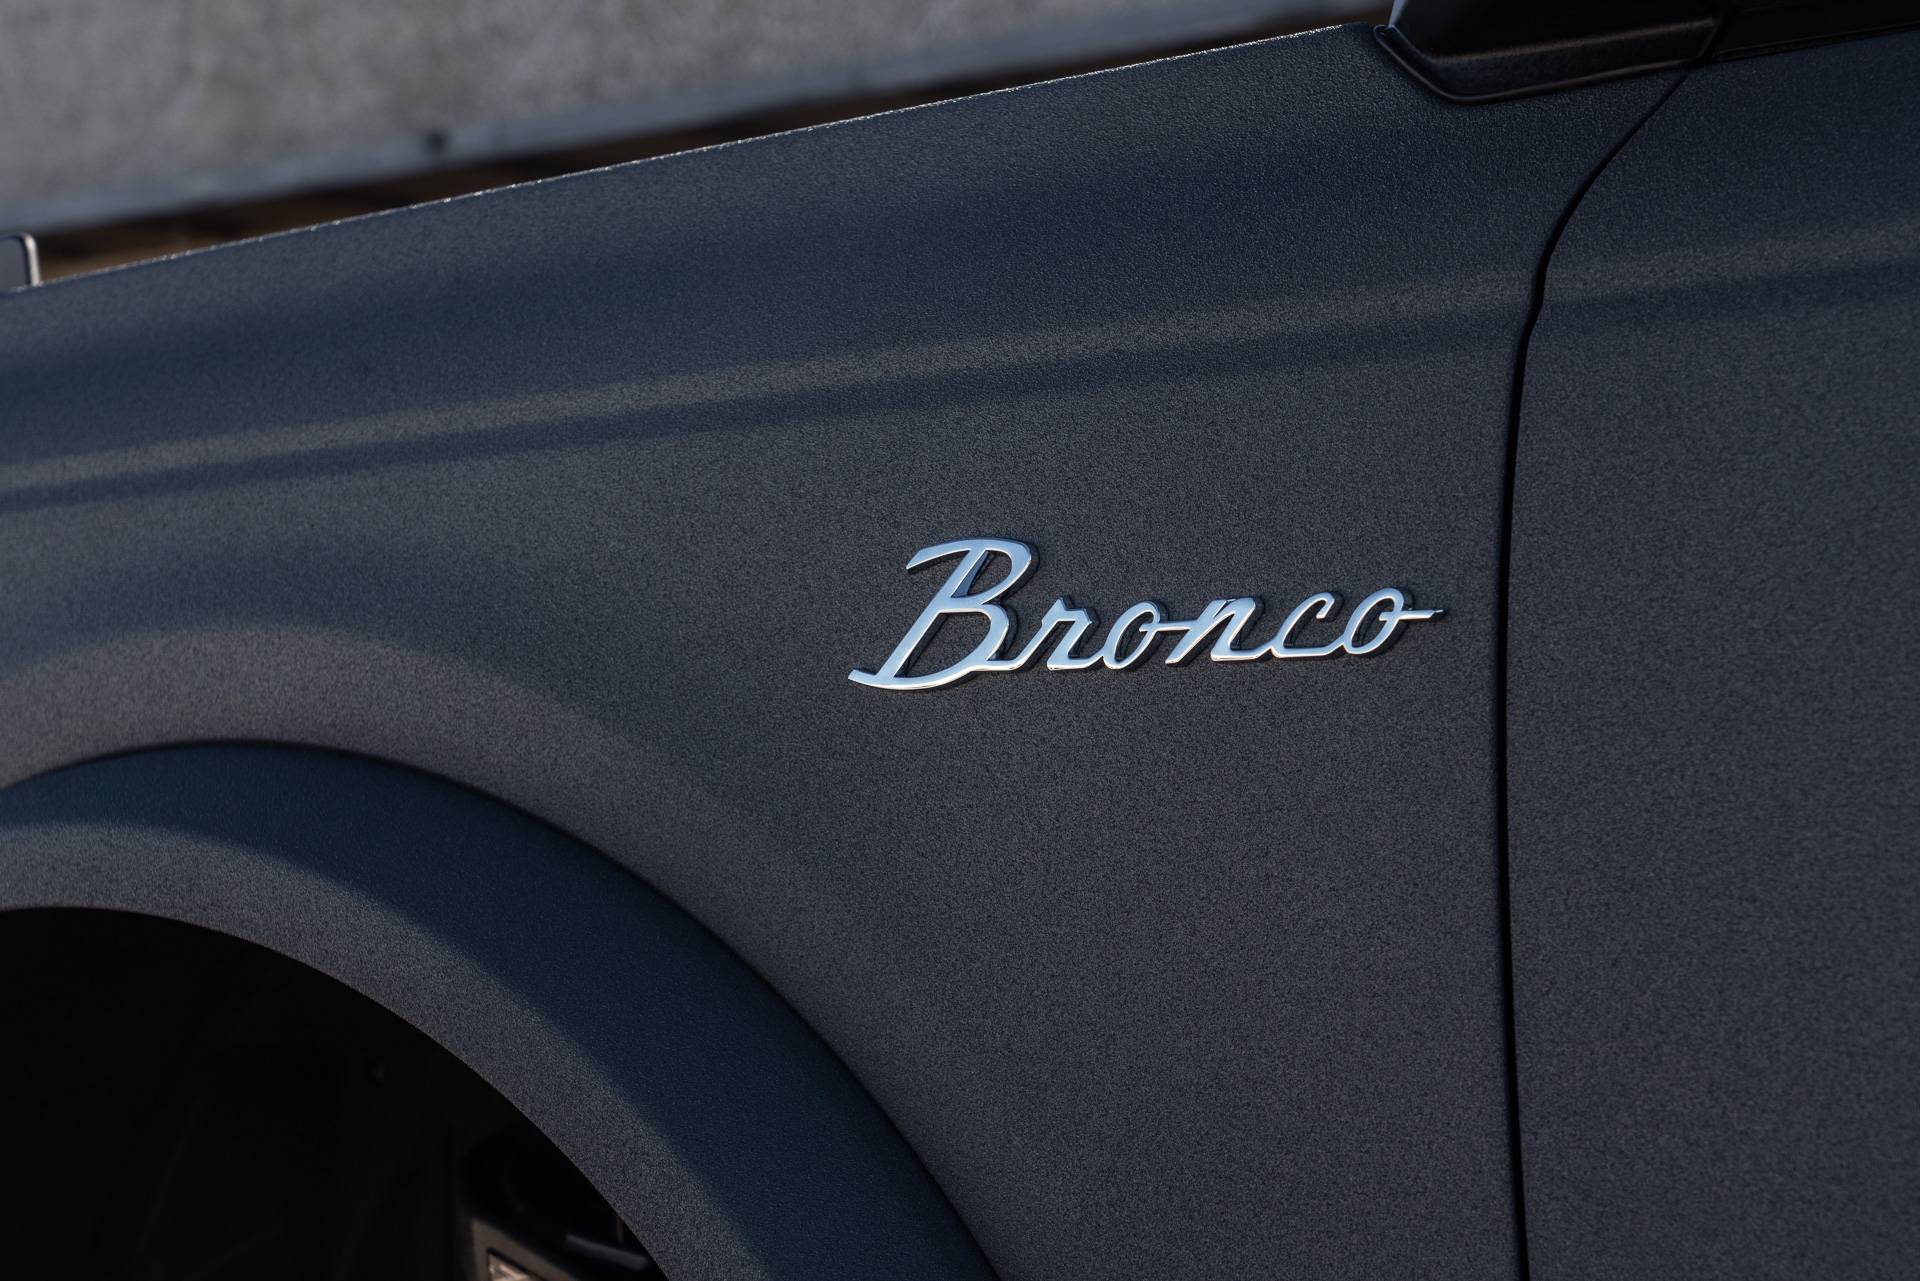 New 2021 Ford Bronco Adventure Series